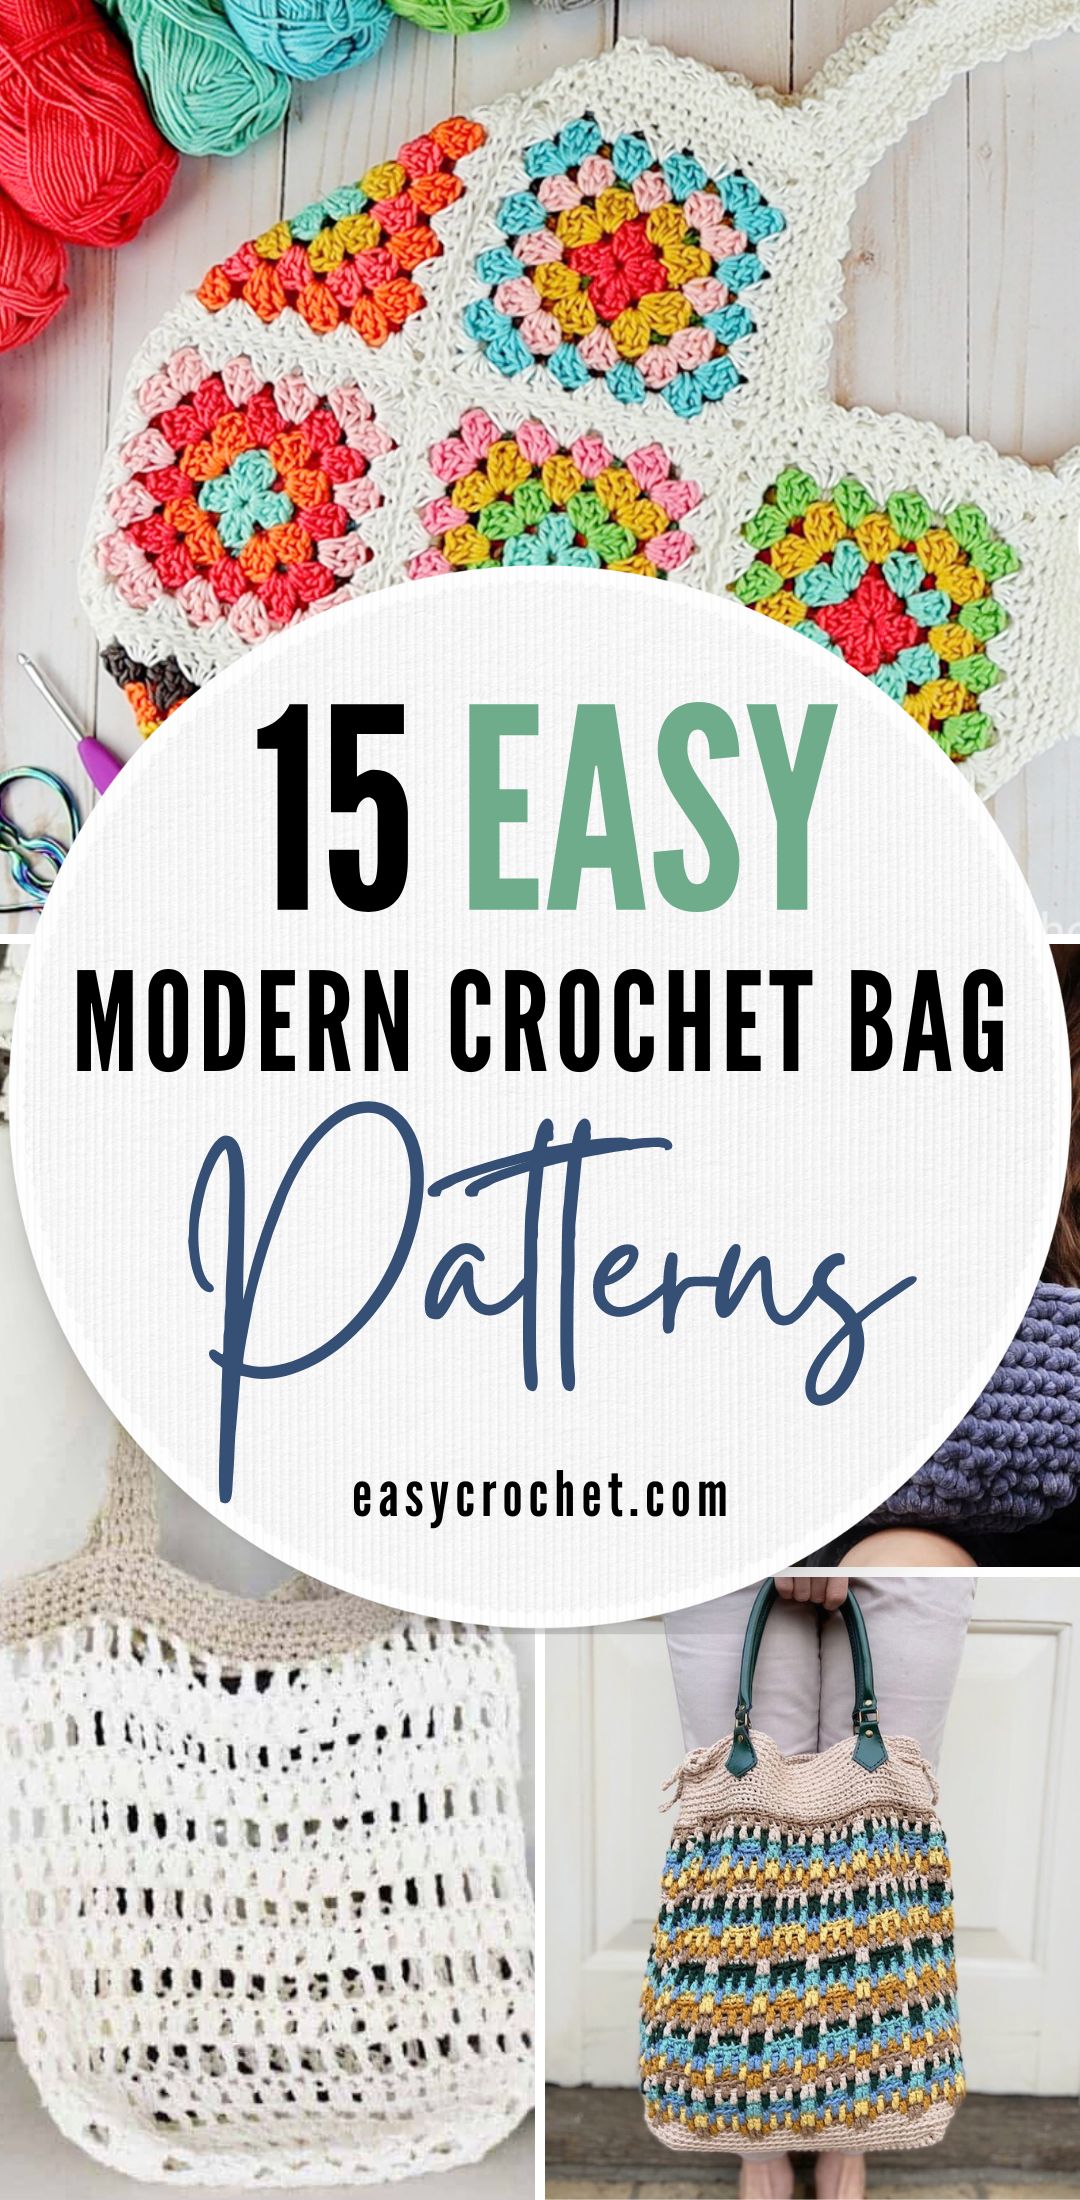 Crochet Bags & More